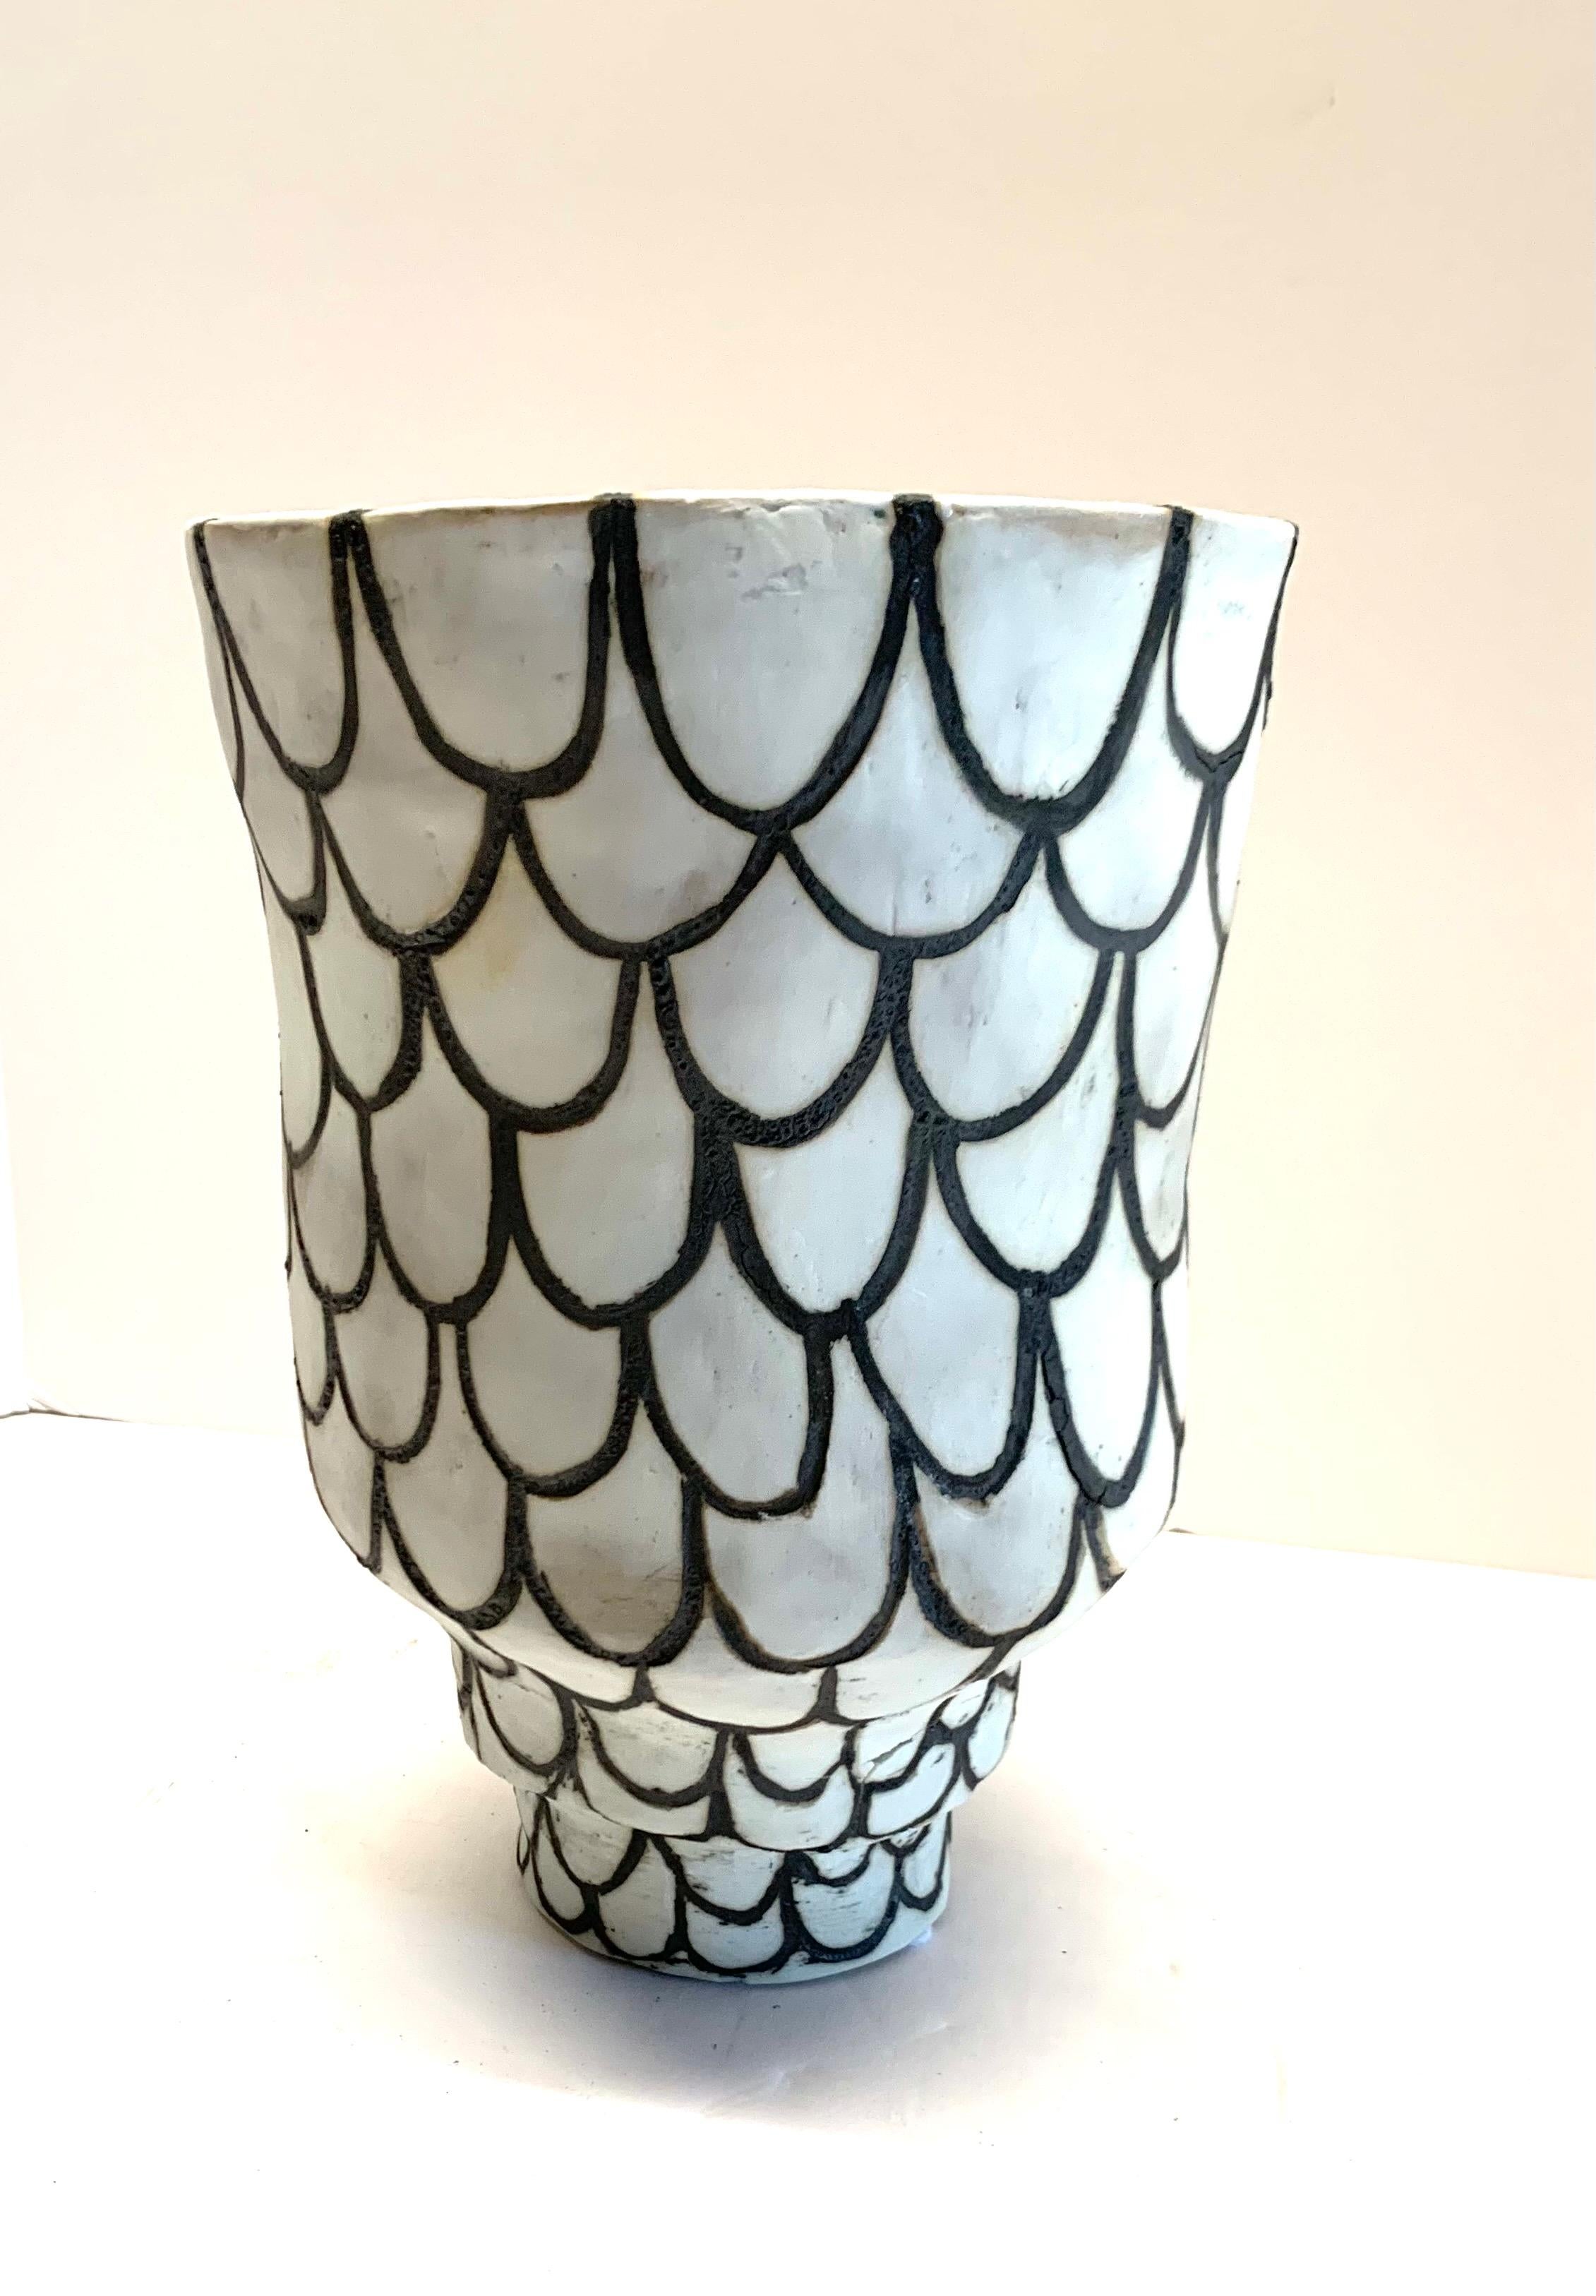 Contemporary Black & White Fish Scale Design Vase by Ceramicist Brenda Holzke, U.S.A